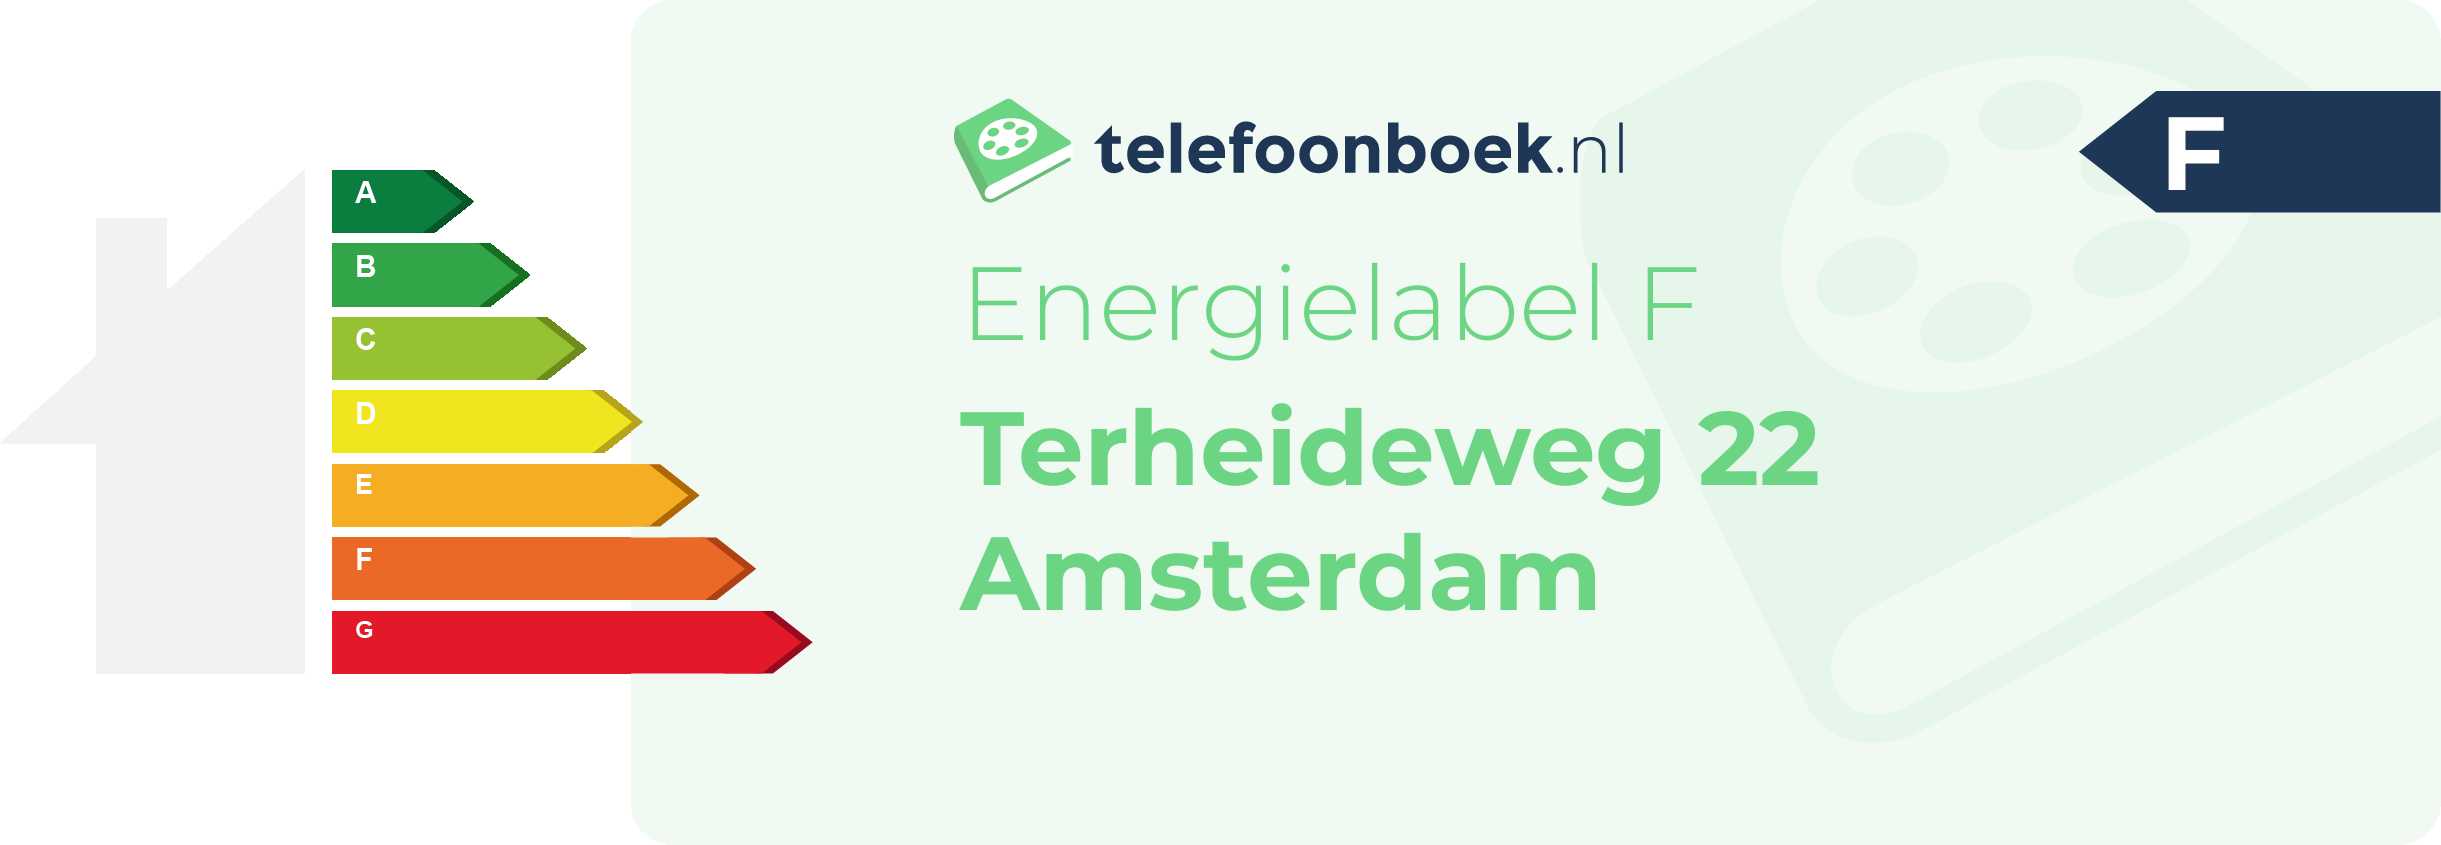 Energielabel Terheideweg 22 Amsterdam